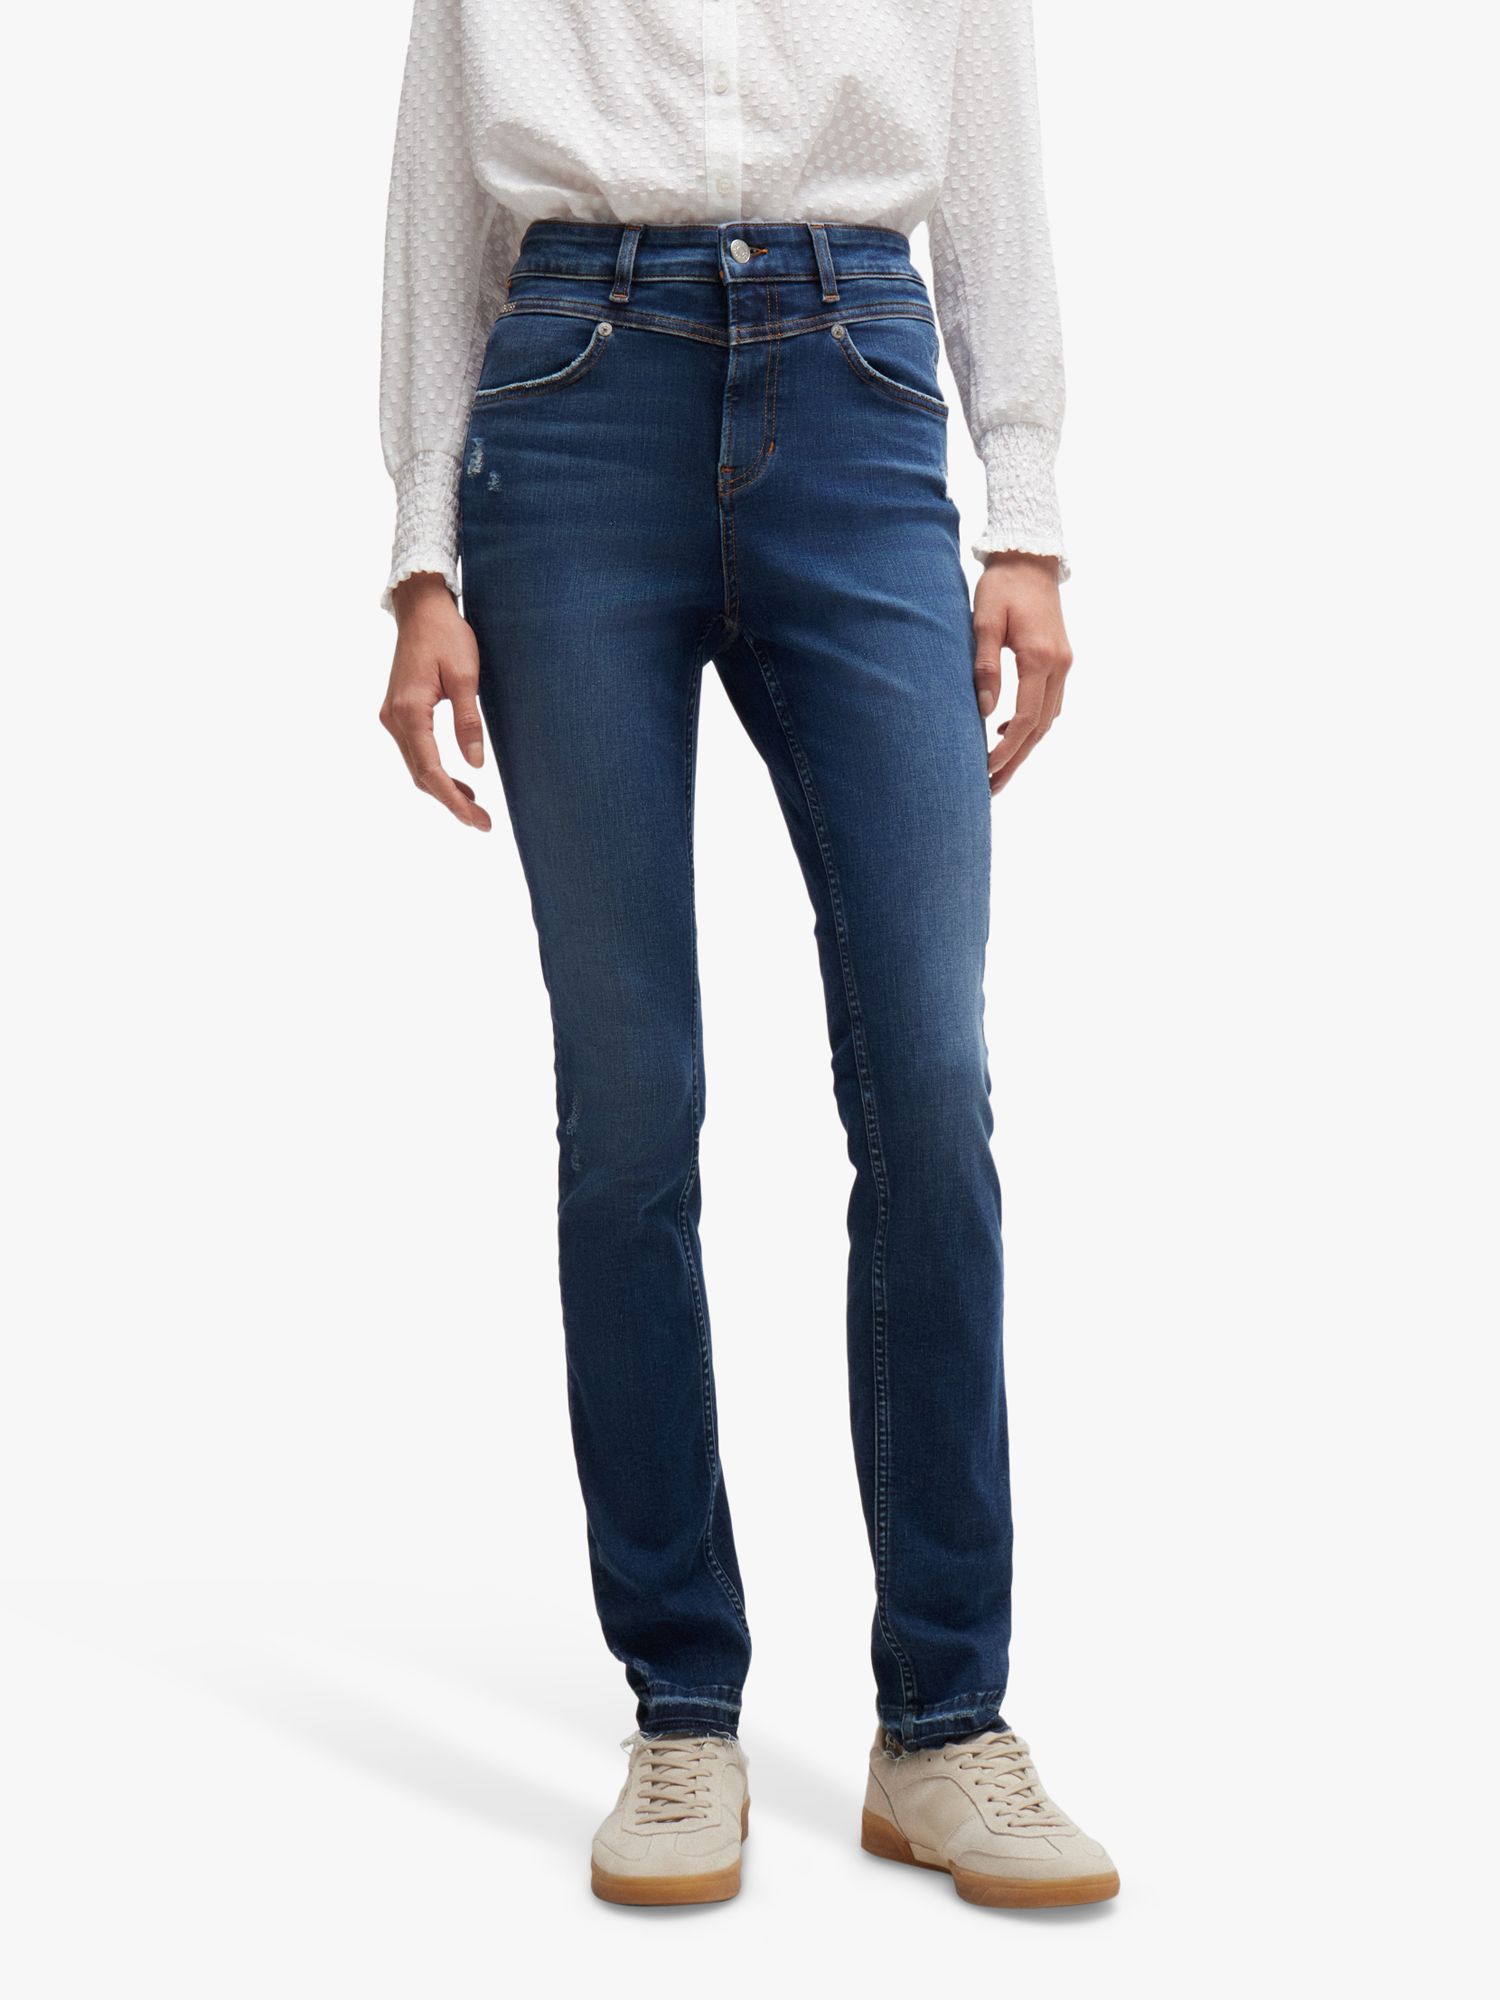 BOSS Cotton Blend Skinny Jeans, Navy, 28